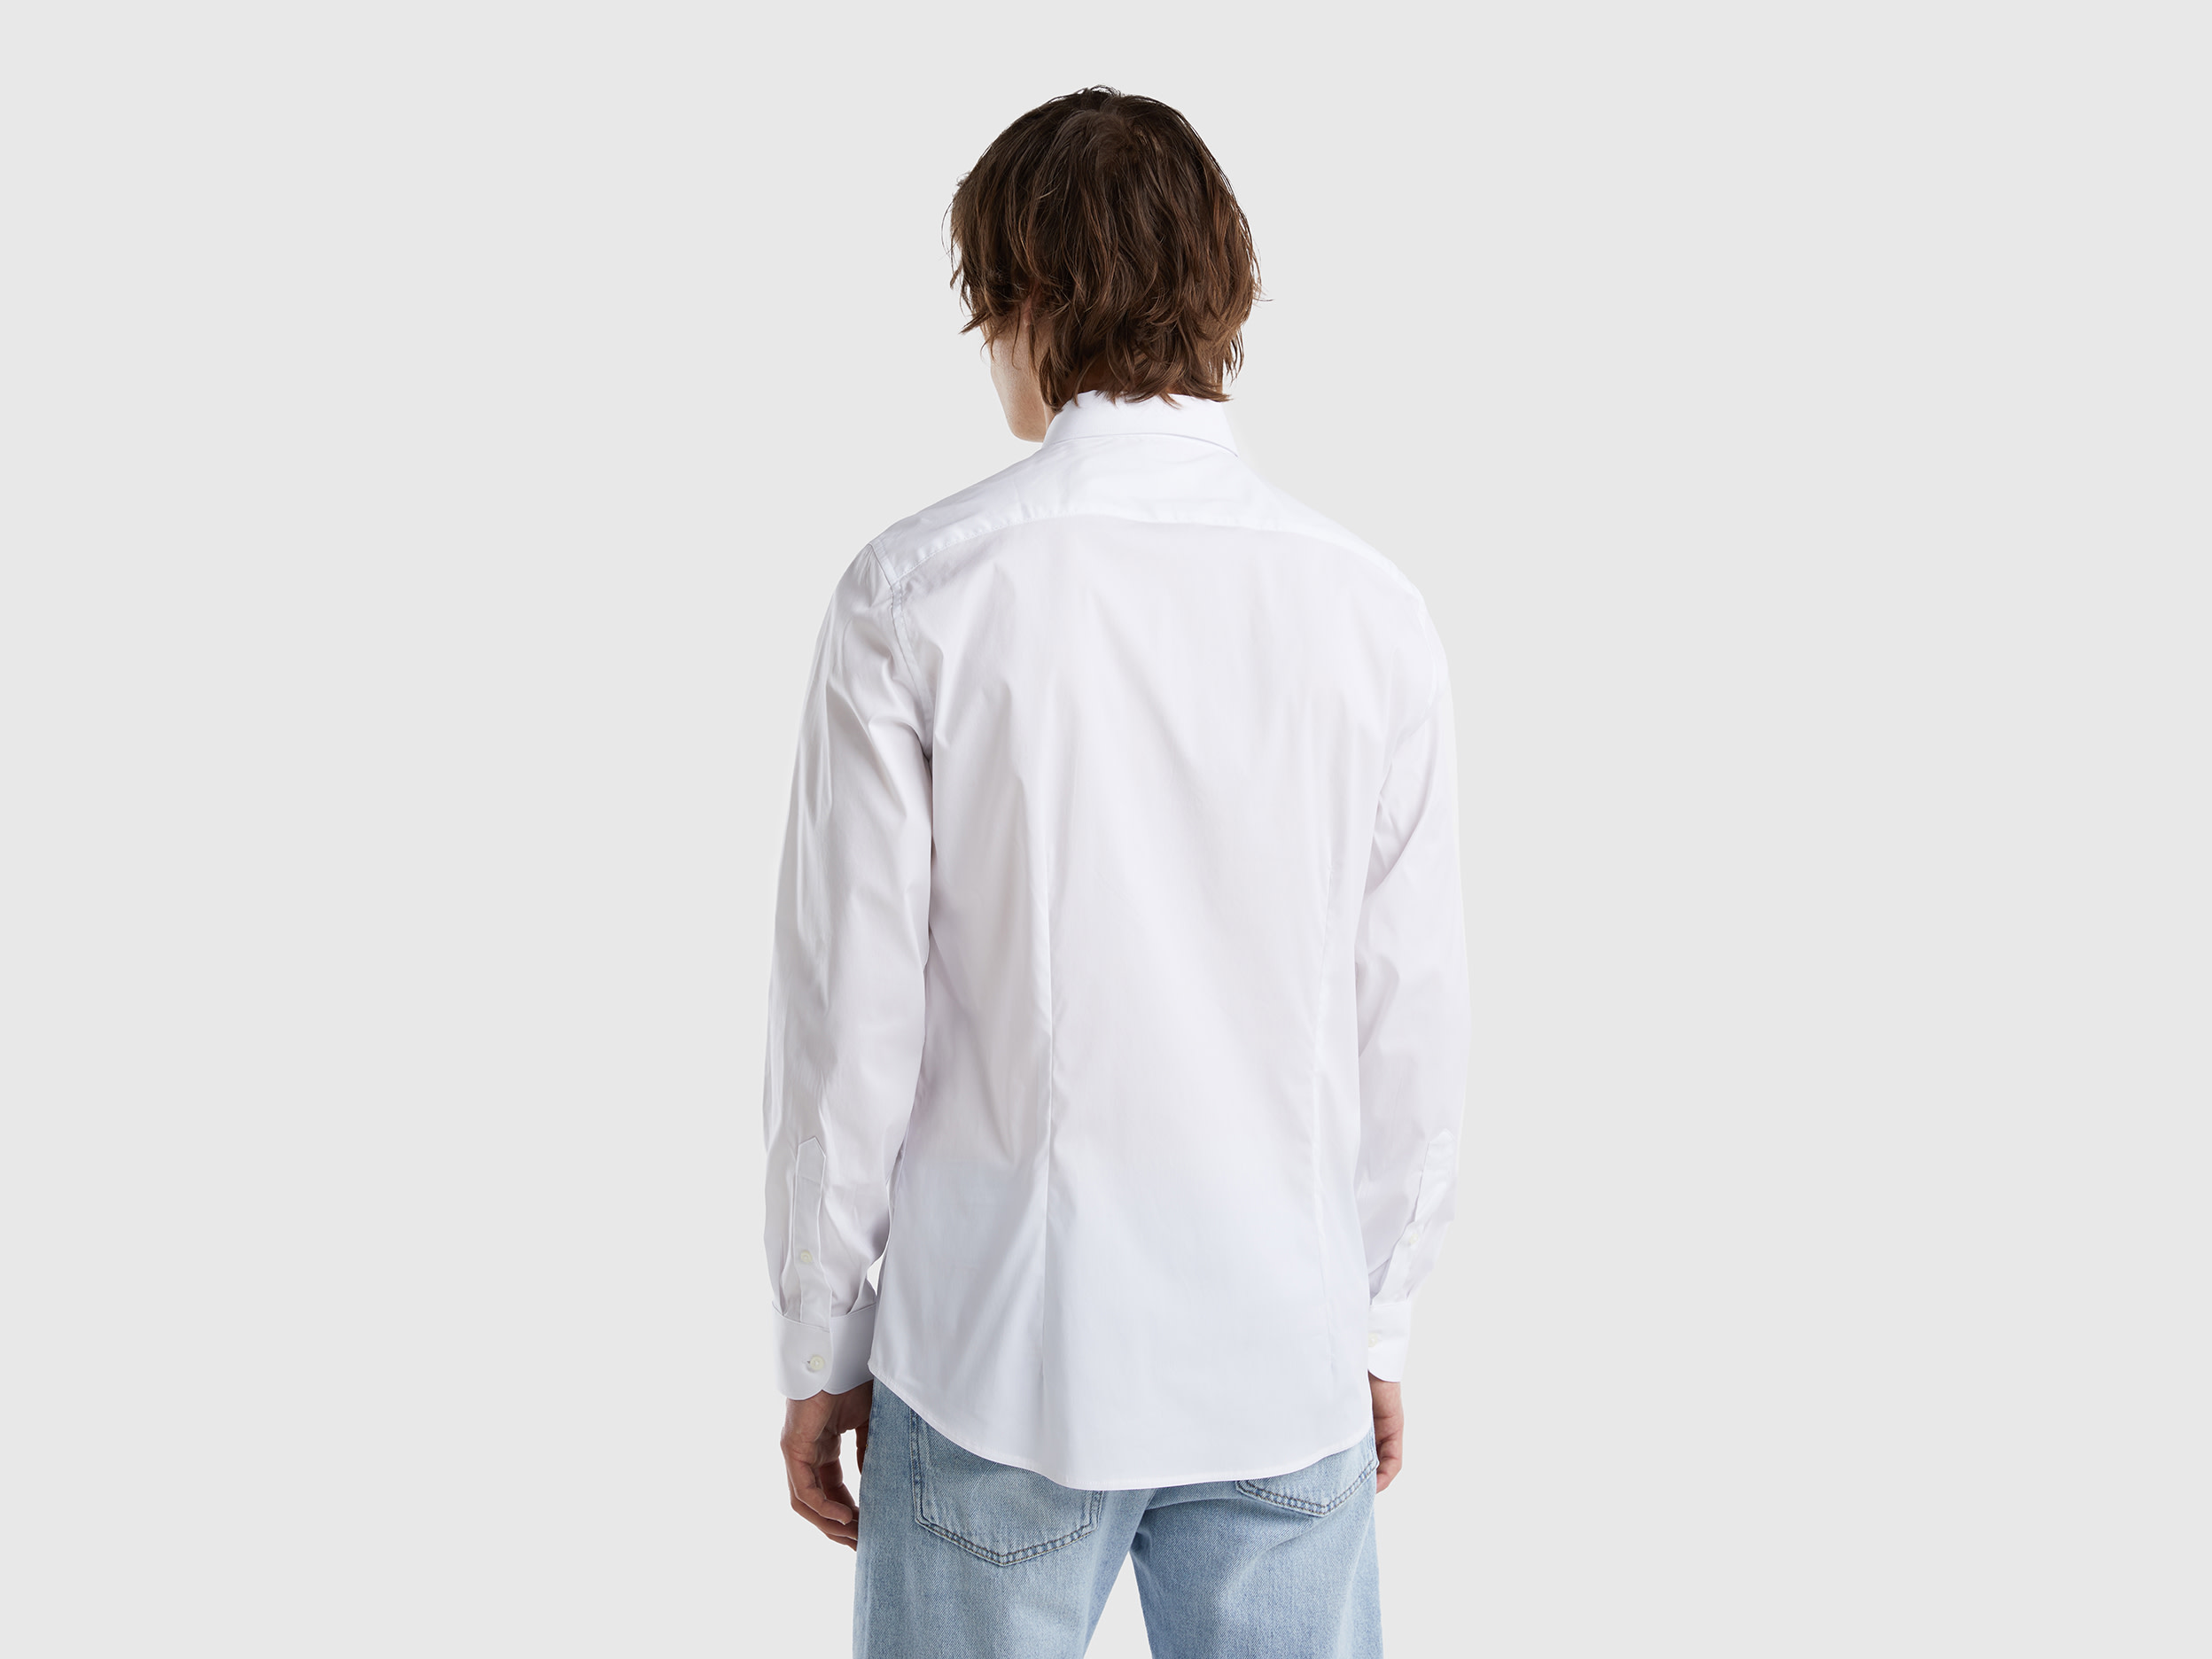 Benetton, Solid Color Slim Fit Shirt, Taglia Xxl, White, Men